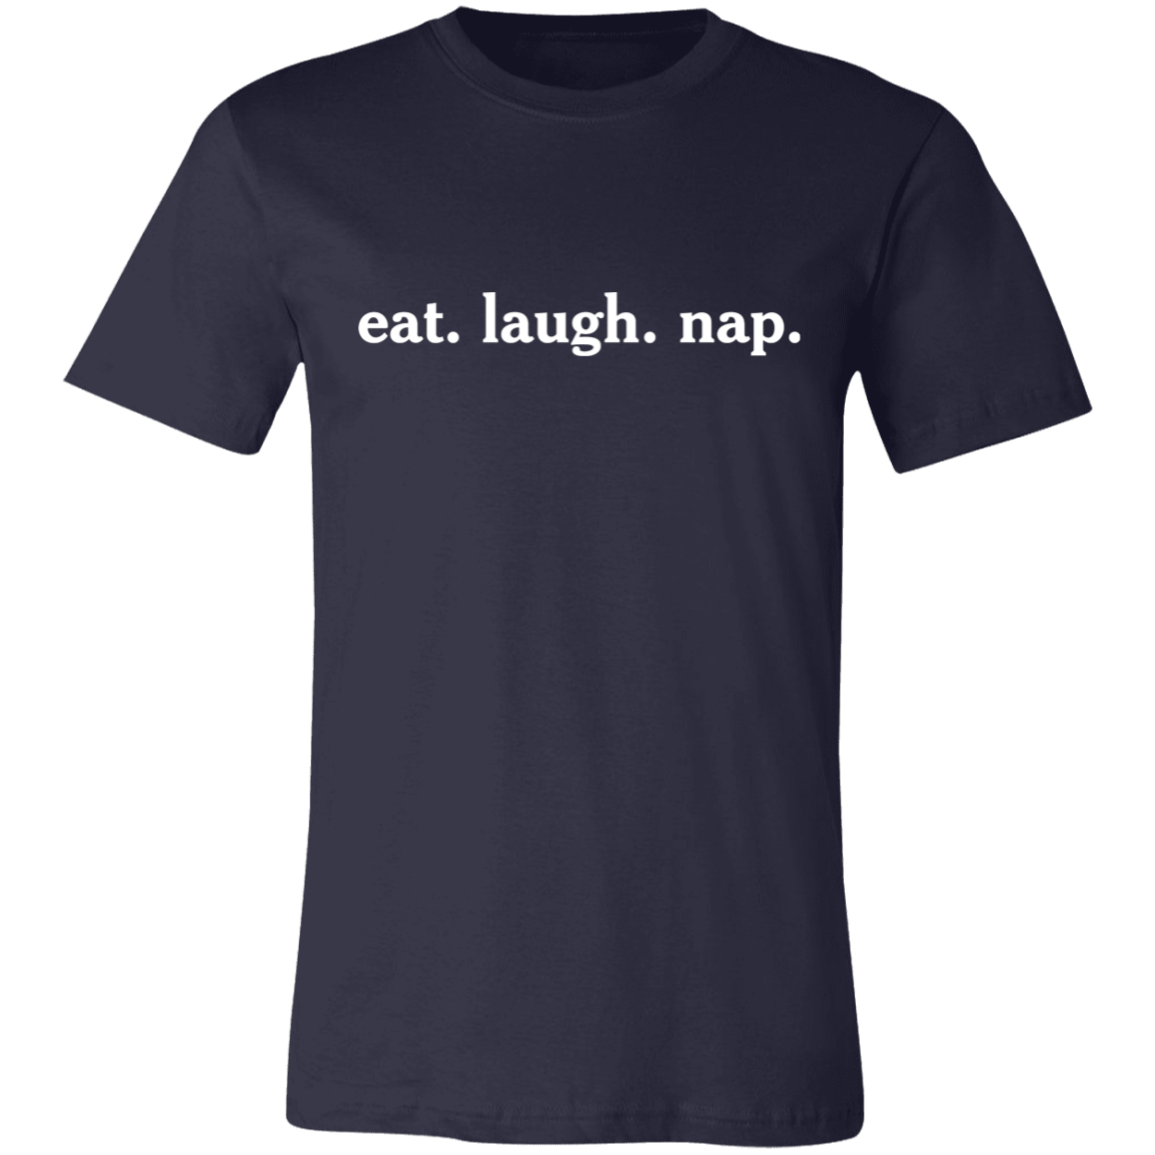 eat. laugh. nap. tee